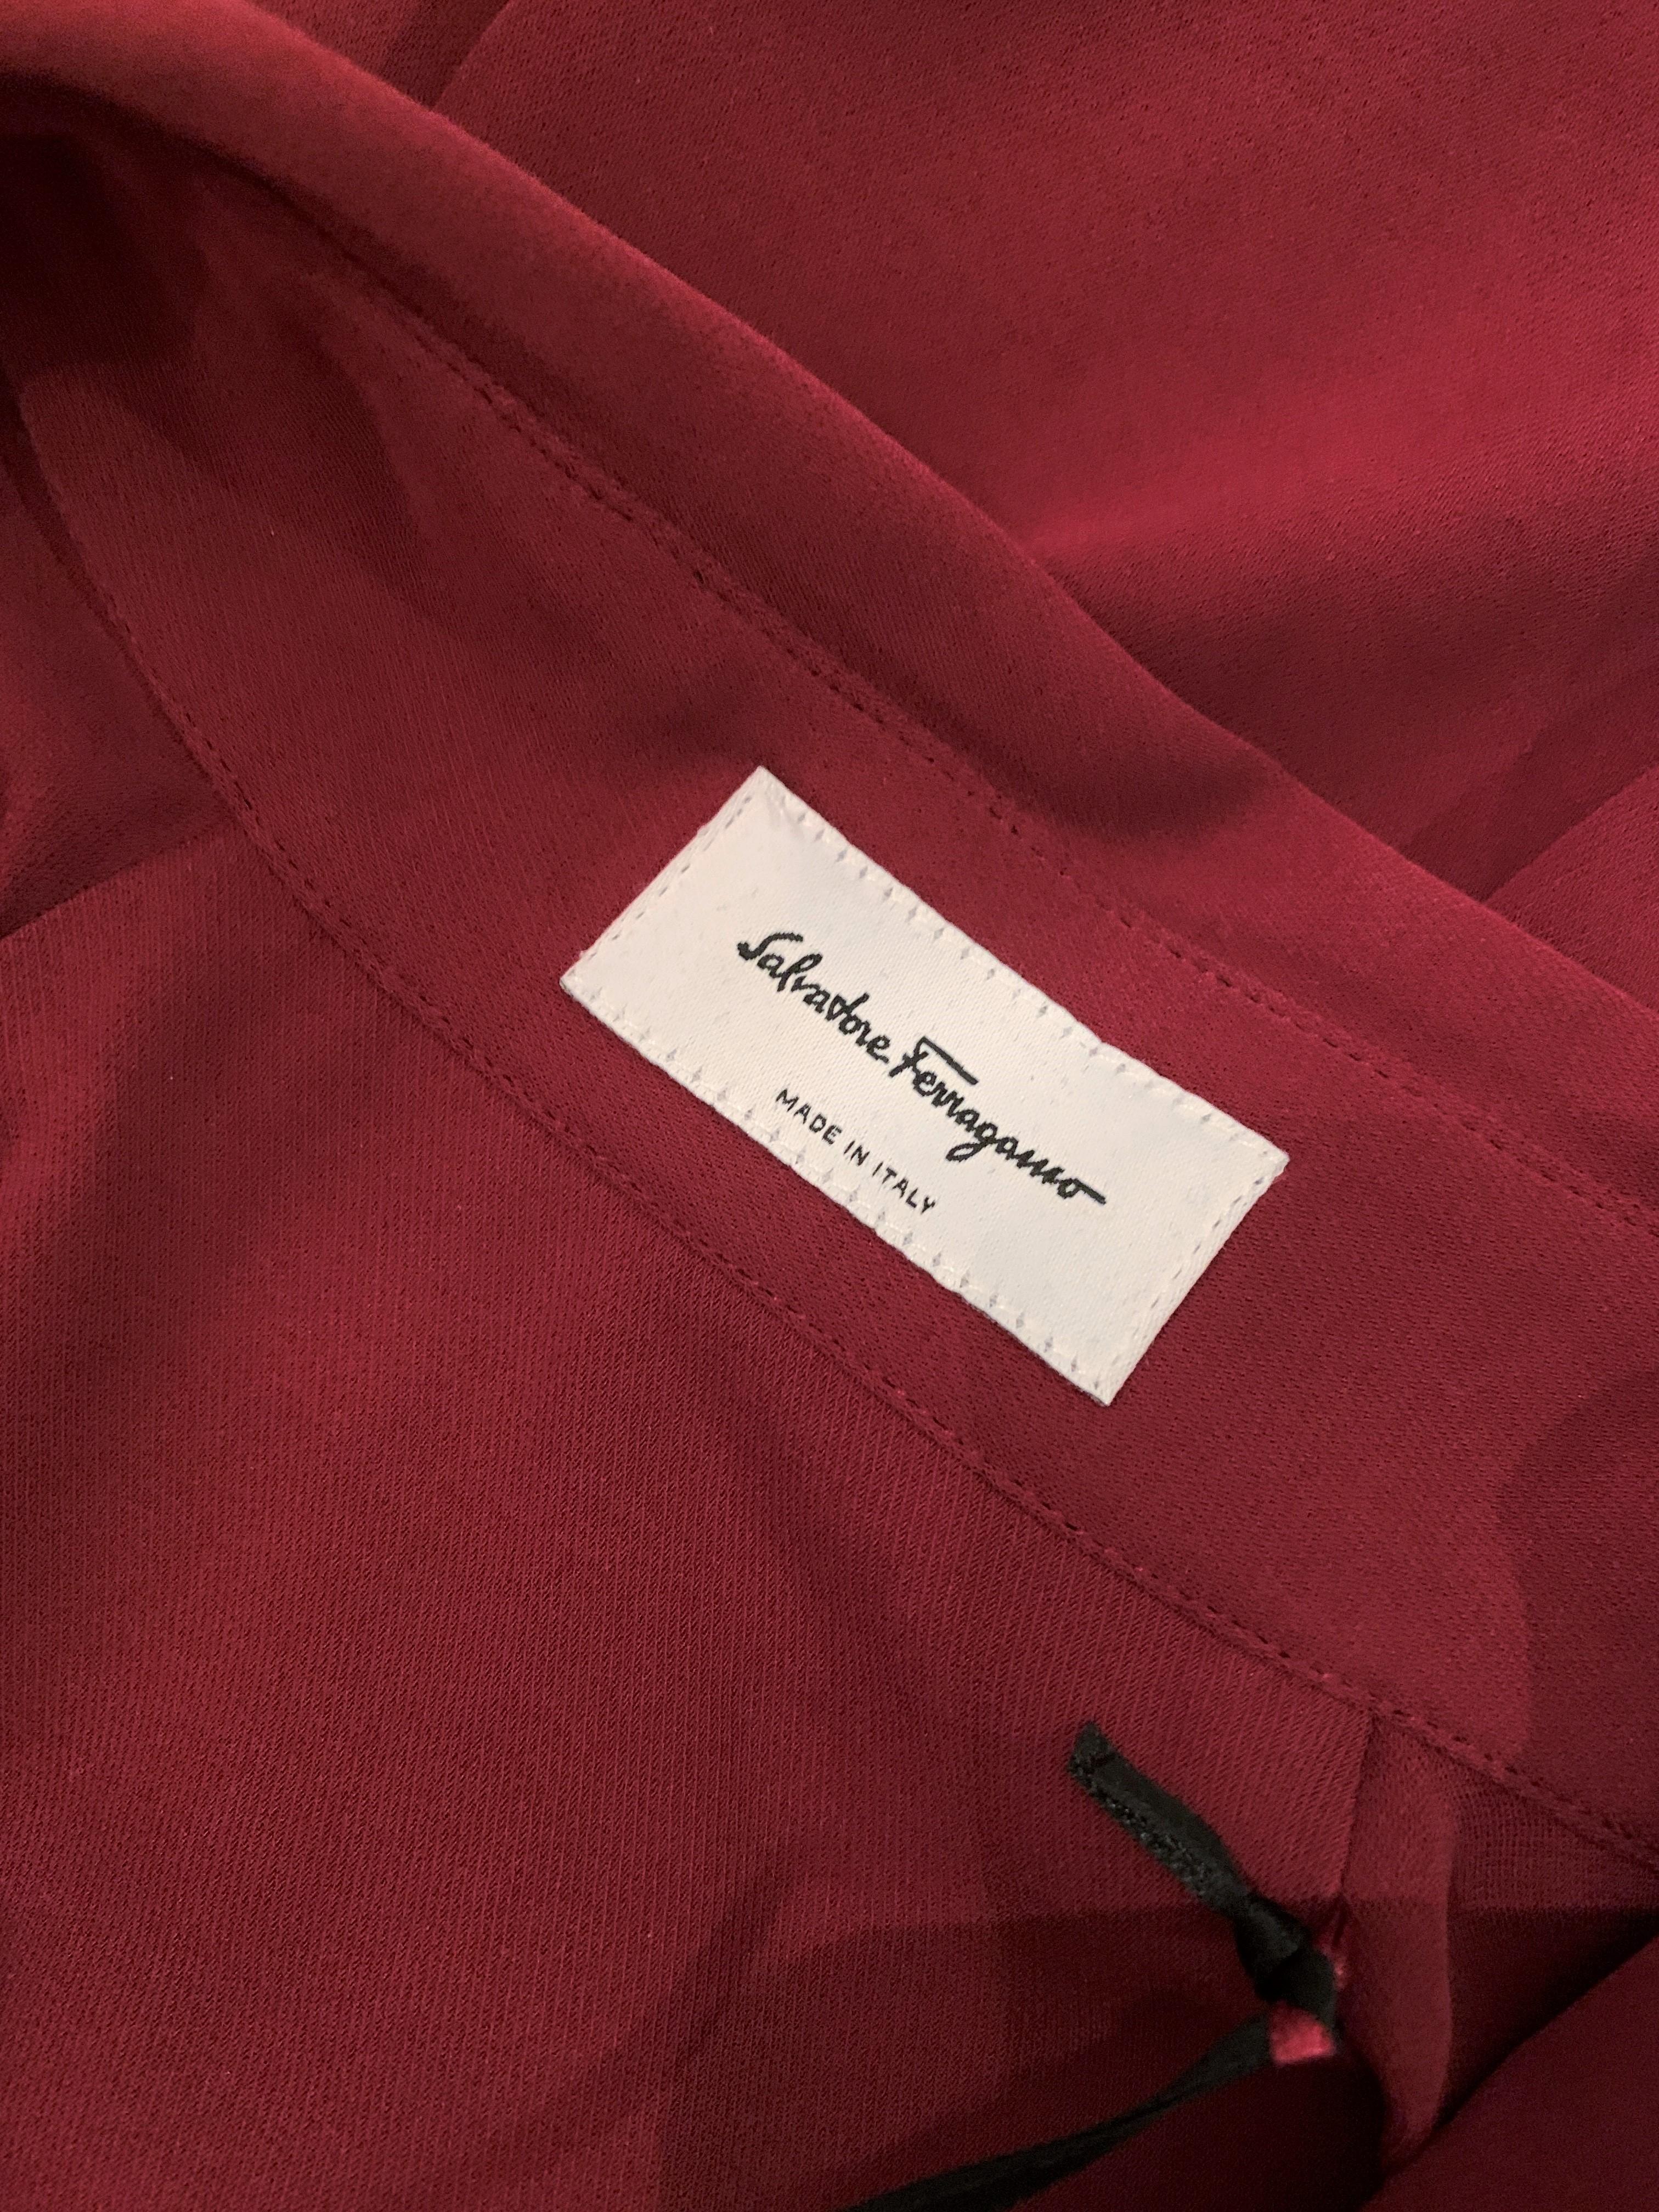 New Rare Salvatore Ferragamo Red Silk Dress F/W 2018  With Tags $3200 Sz 42 2